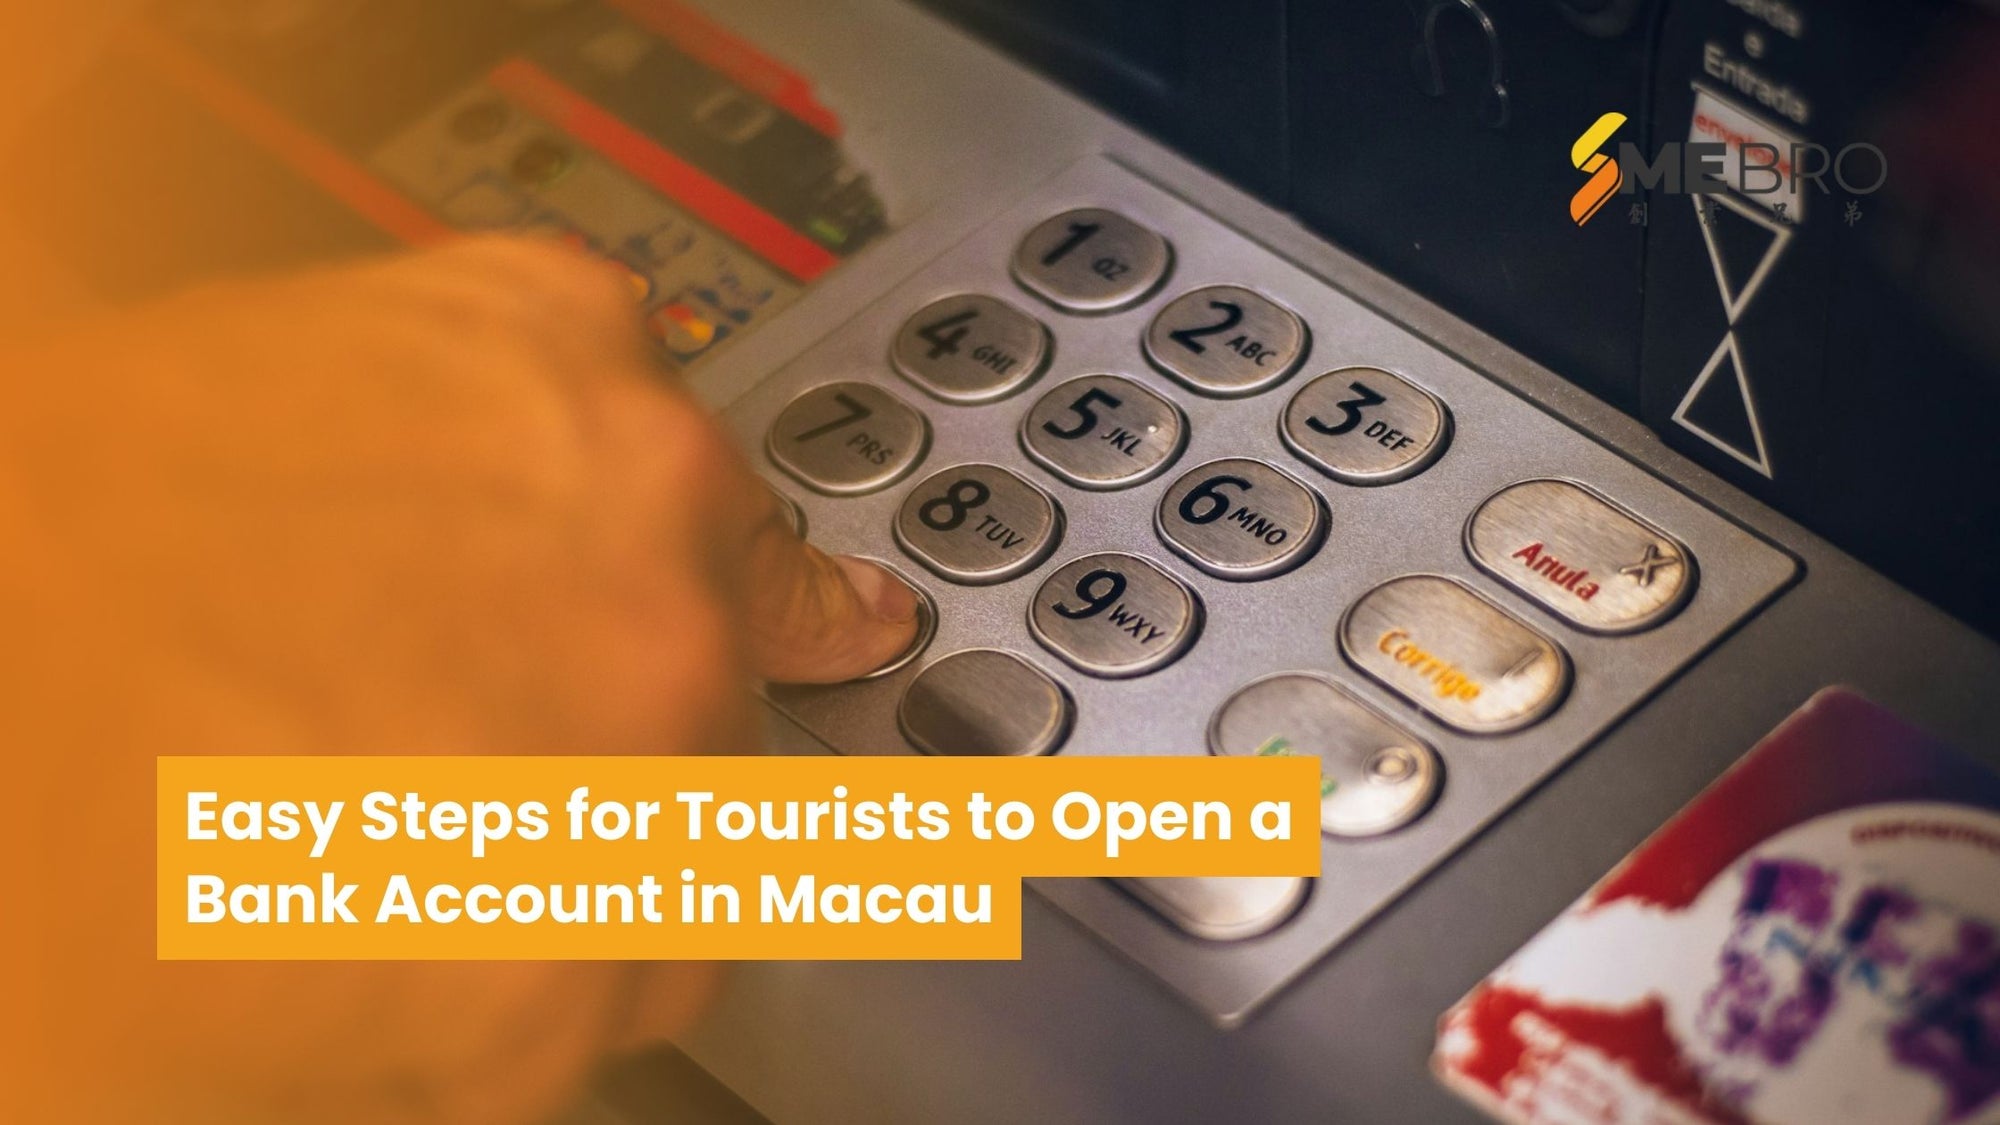 Open a Bank Account in Macau